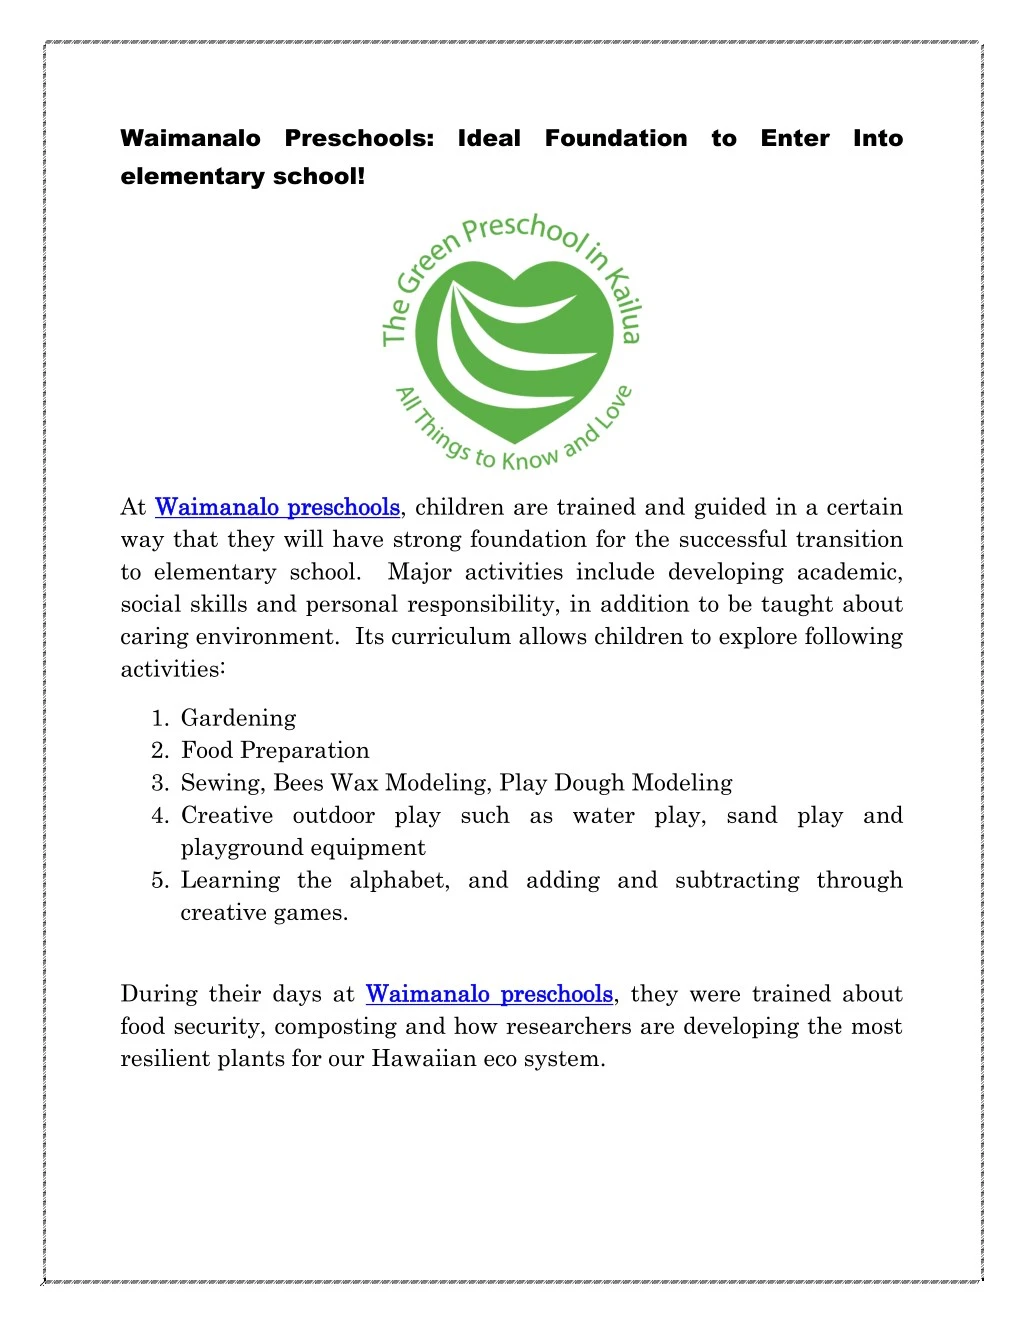 waimanalo preschools ideal foundation to enter